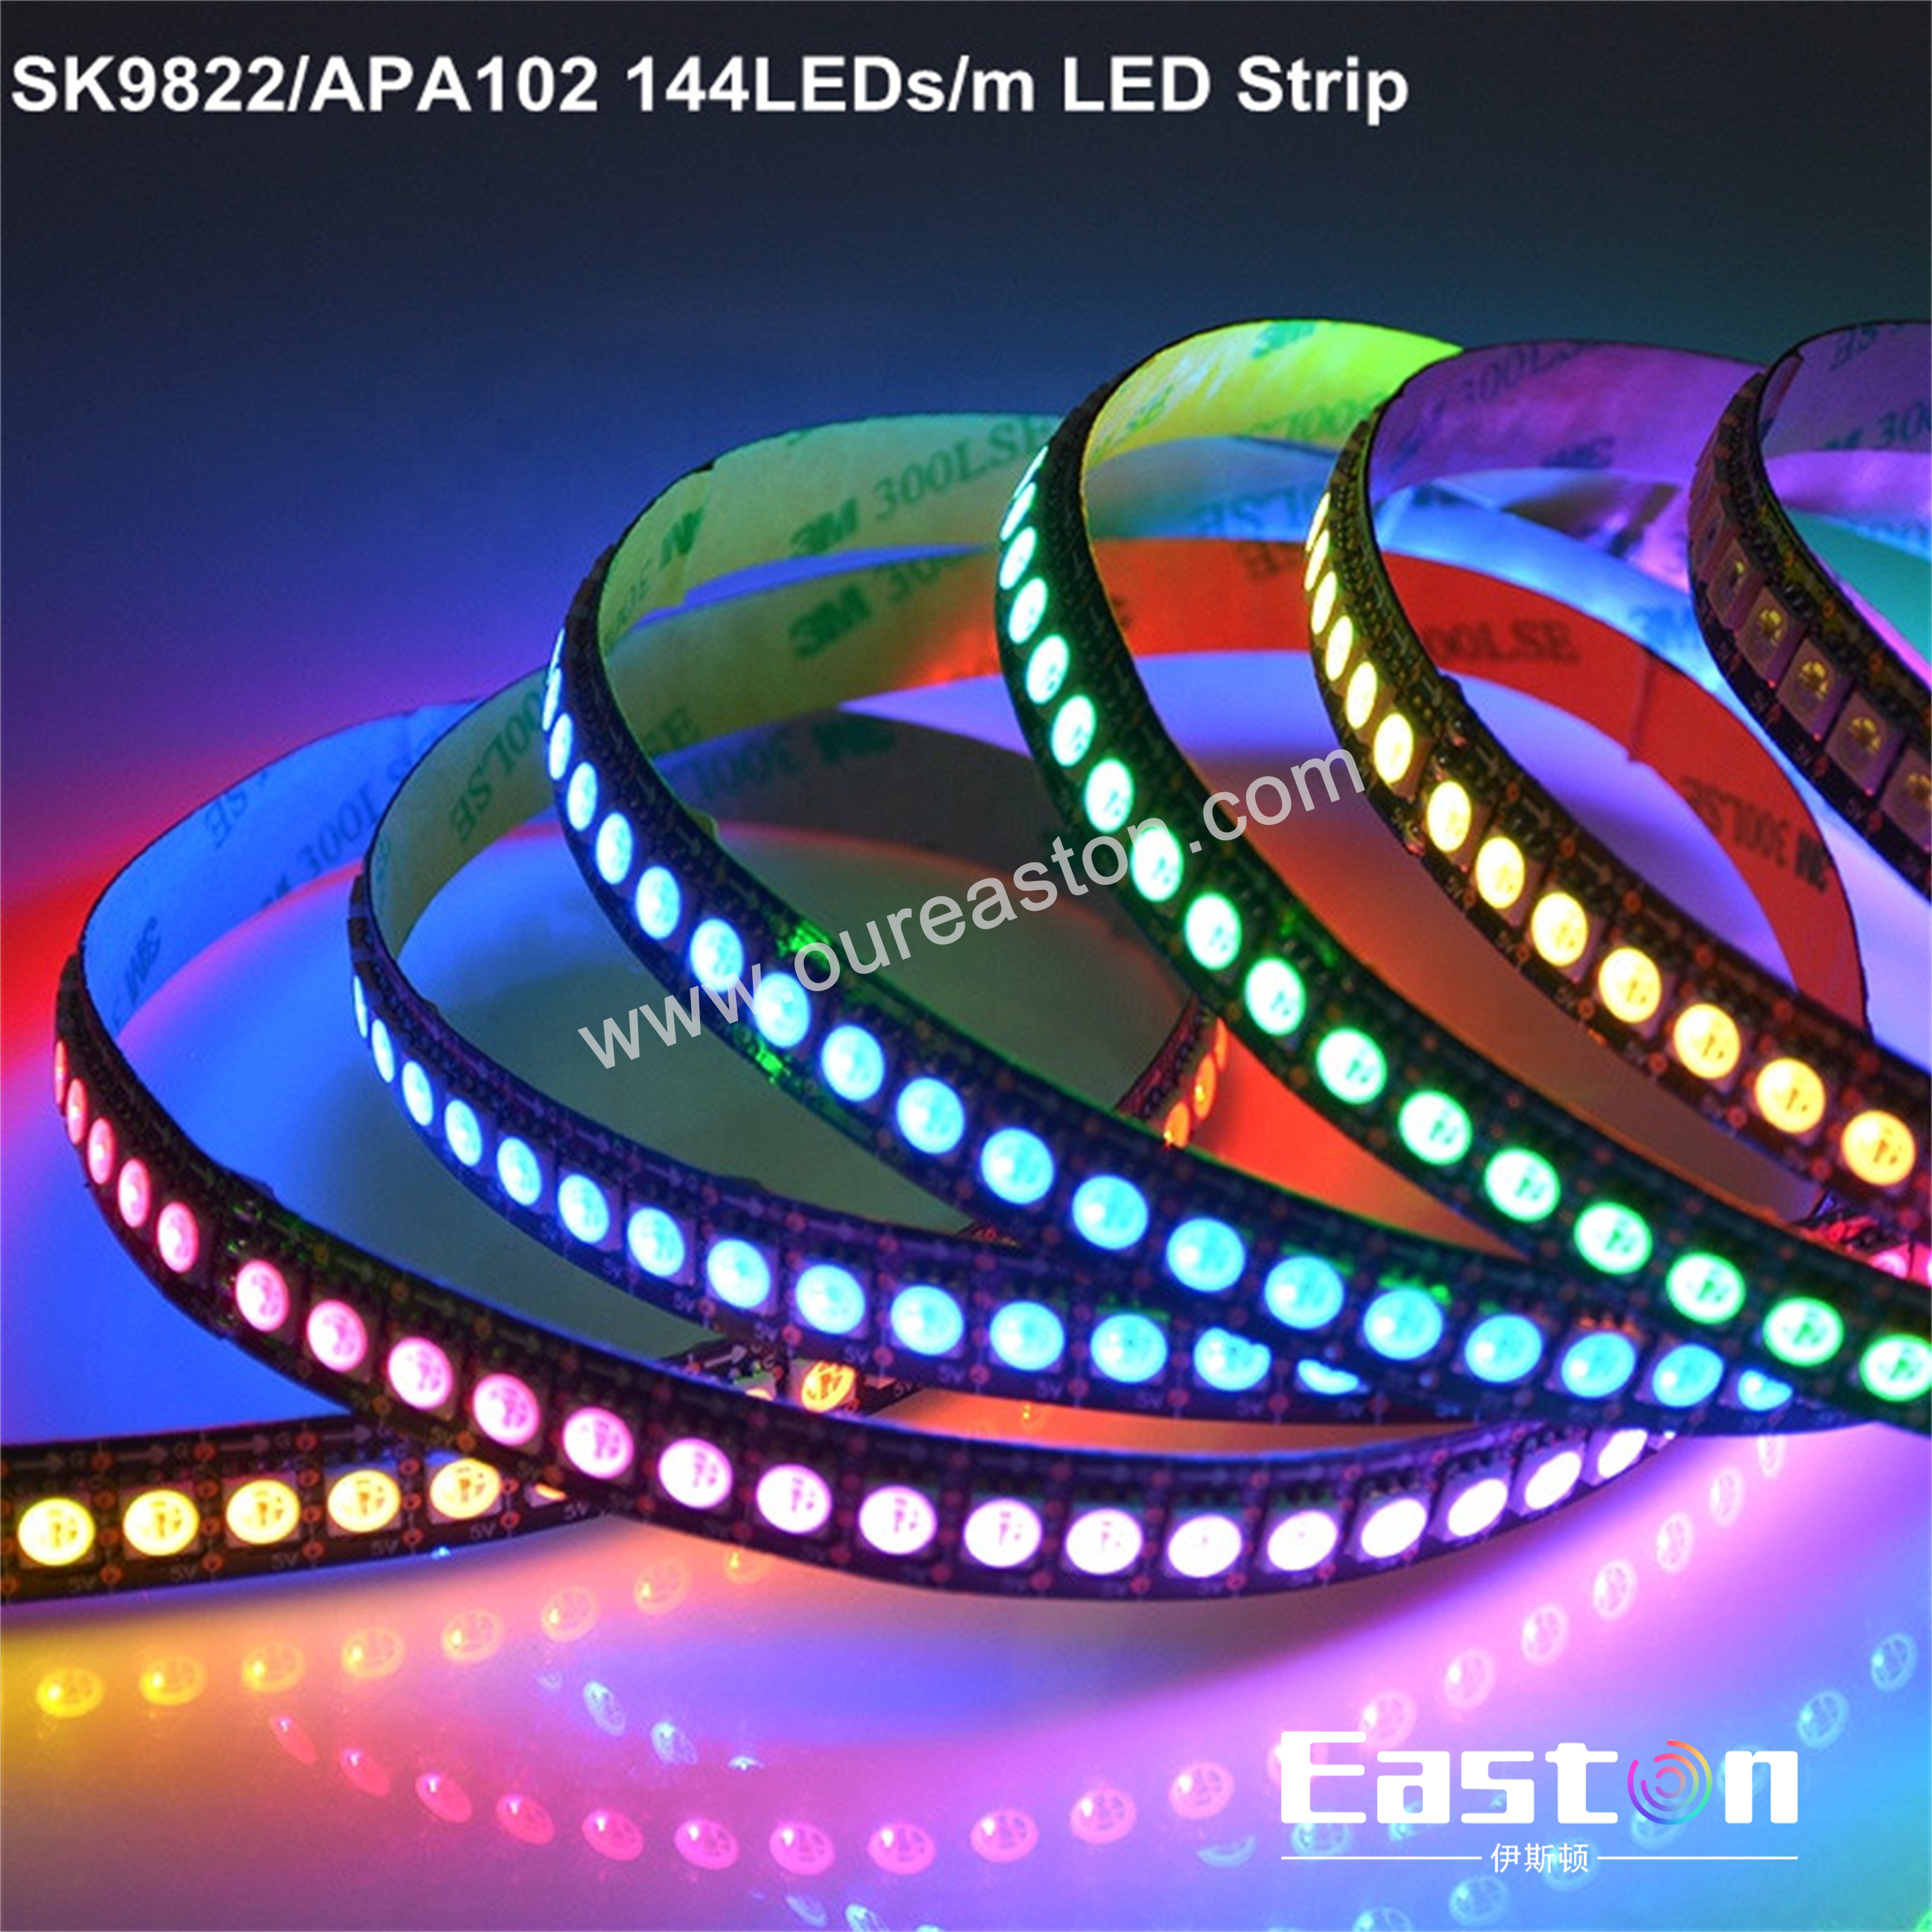 Apa102/SK9822 addressable Digital led strip